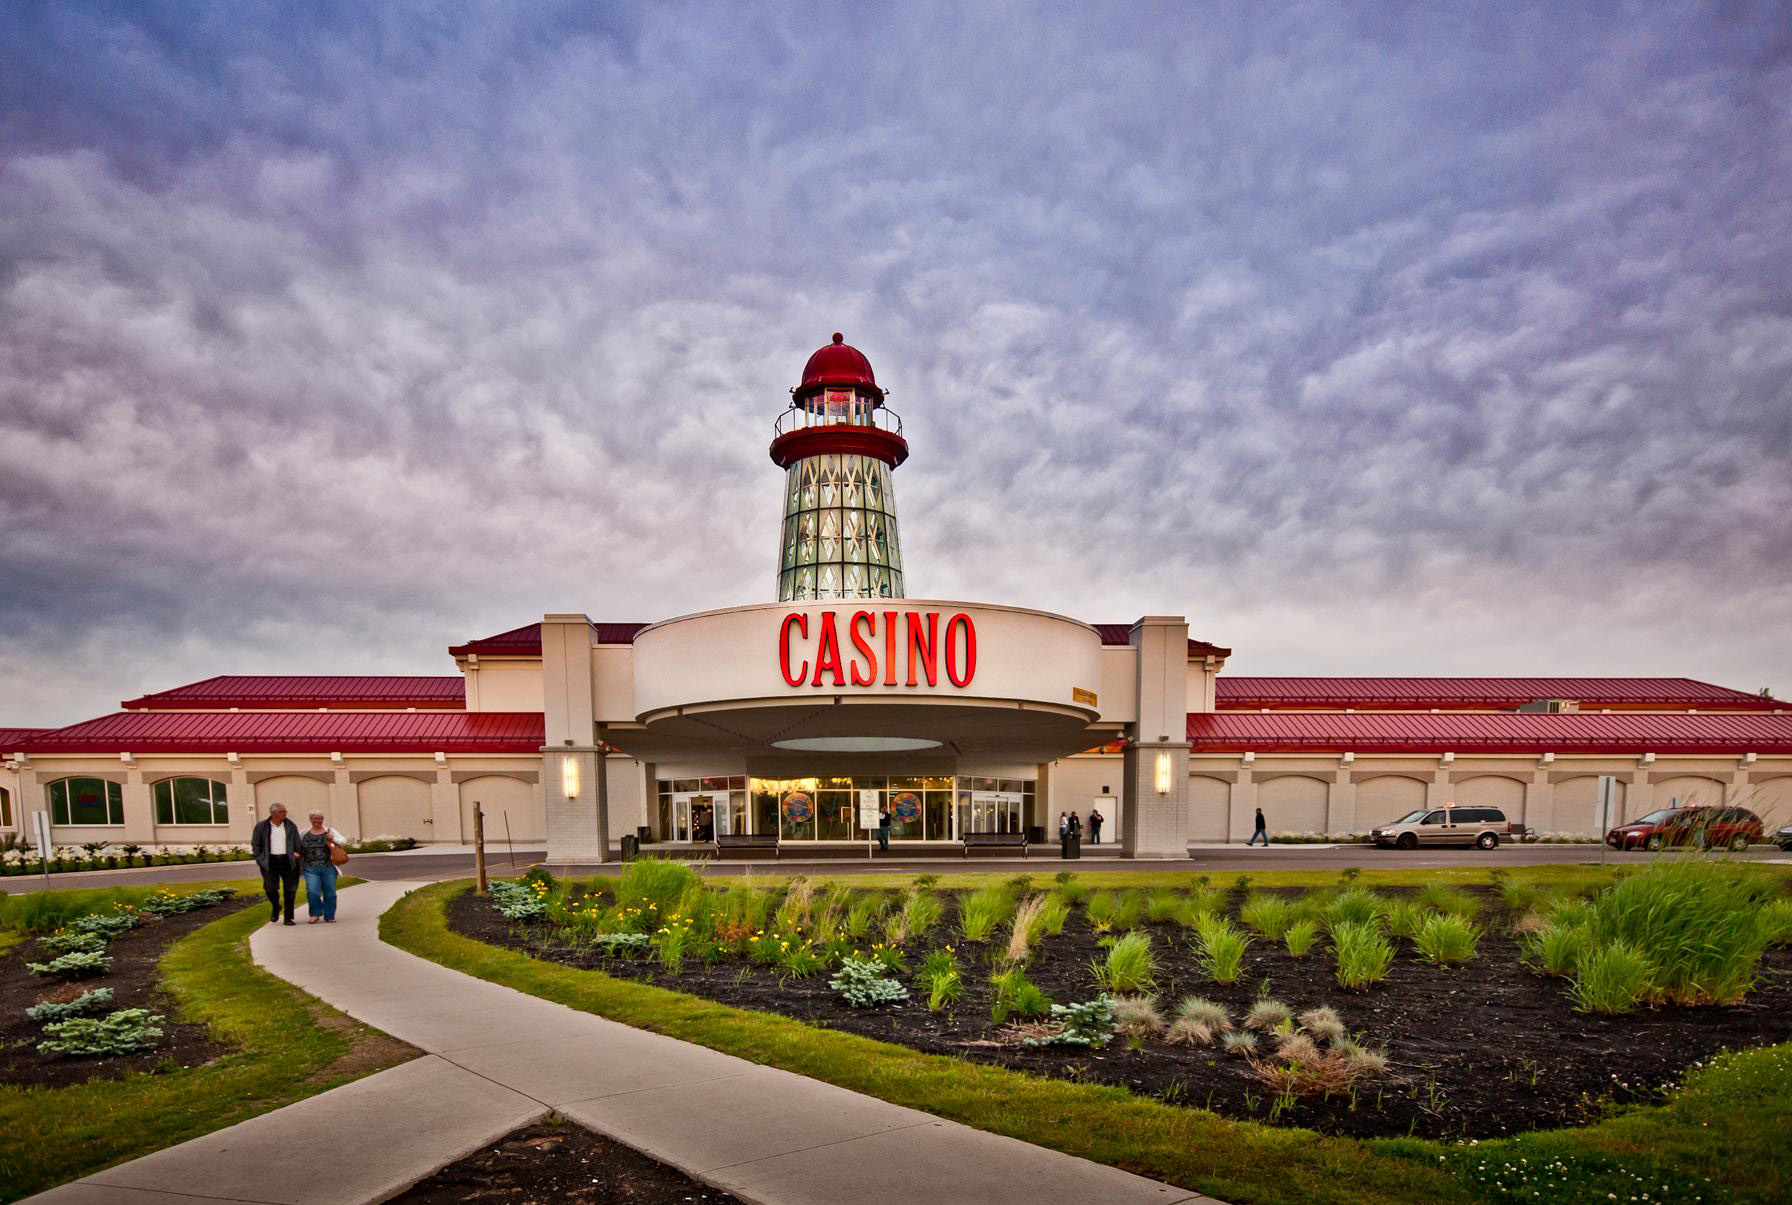 Casino New Brunswick / #CanadaDo / Best Night Life Spots in New Brunswick